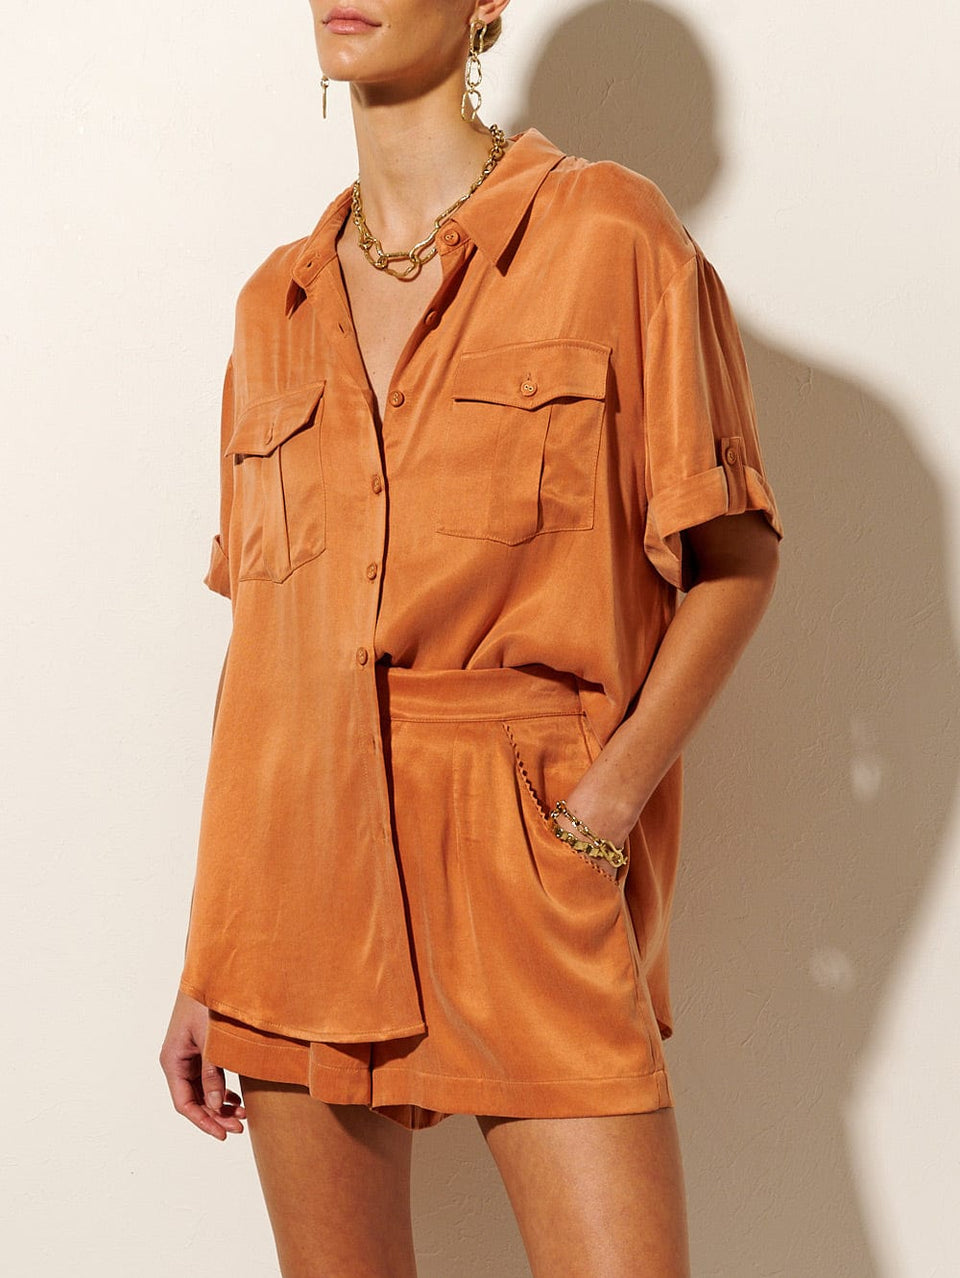 KIVARI Bianca Short | Model wears Orange Shorts Close Up